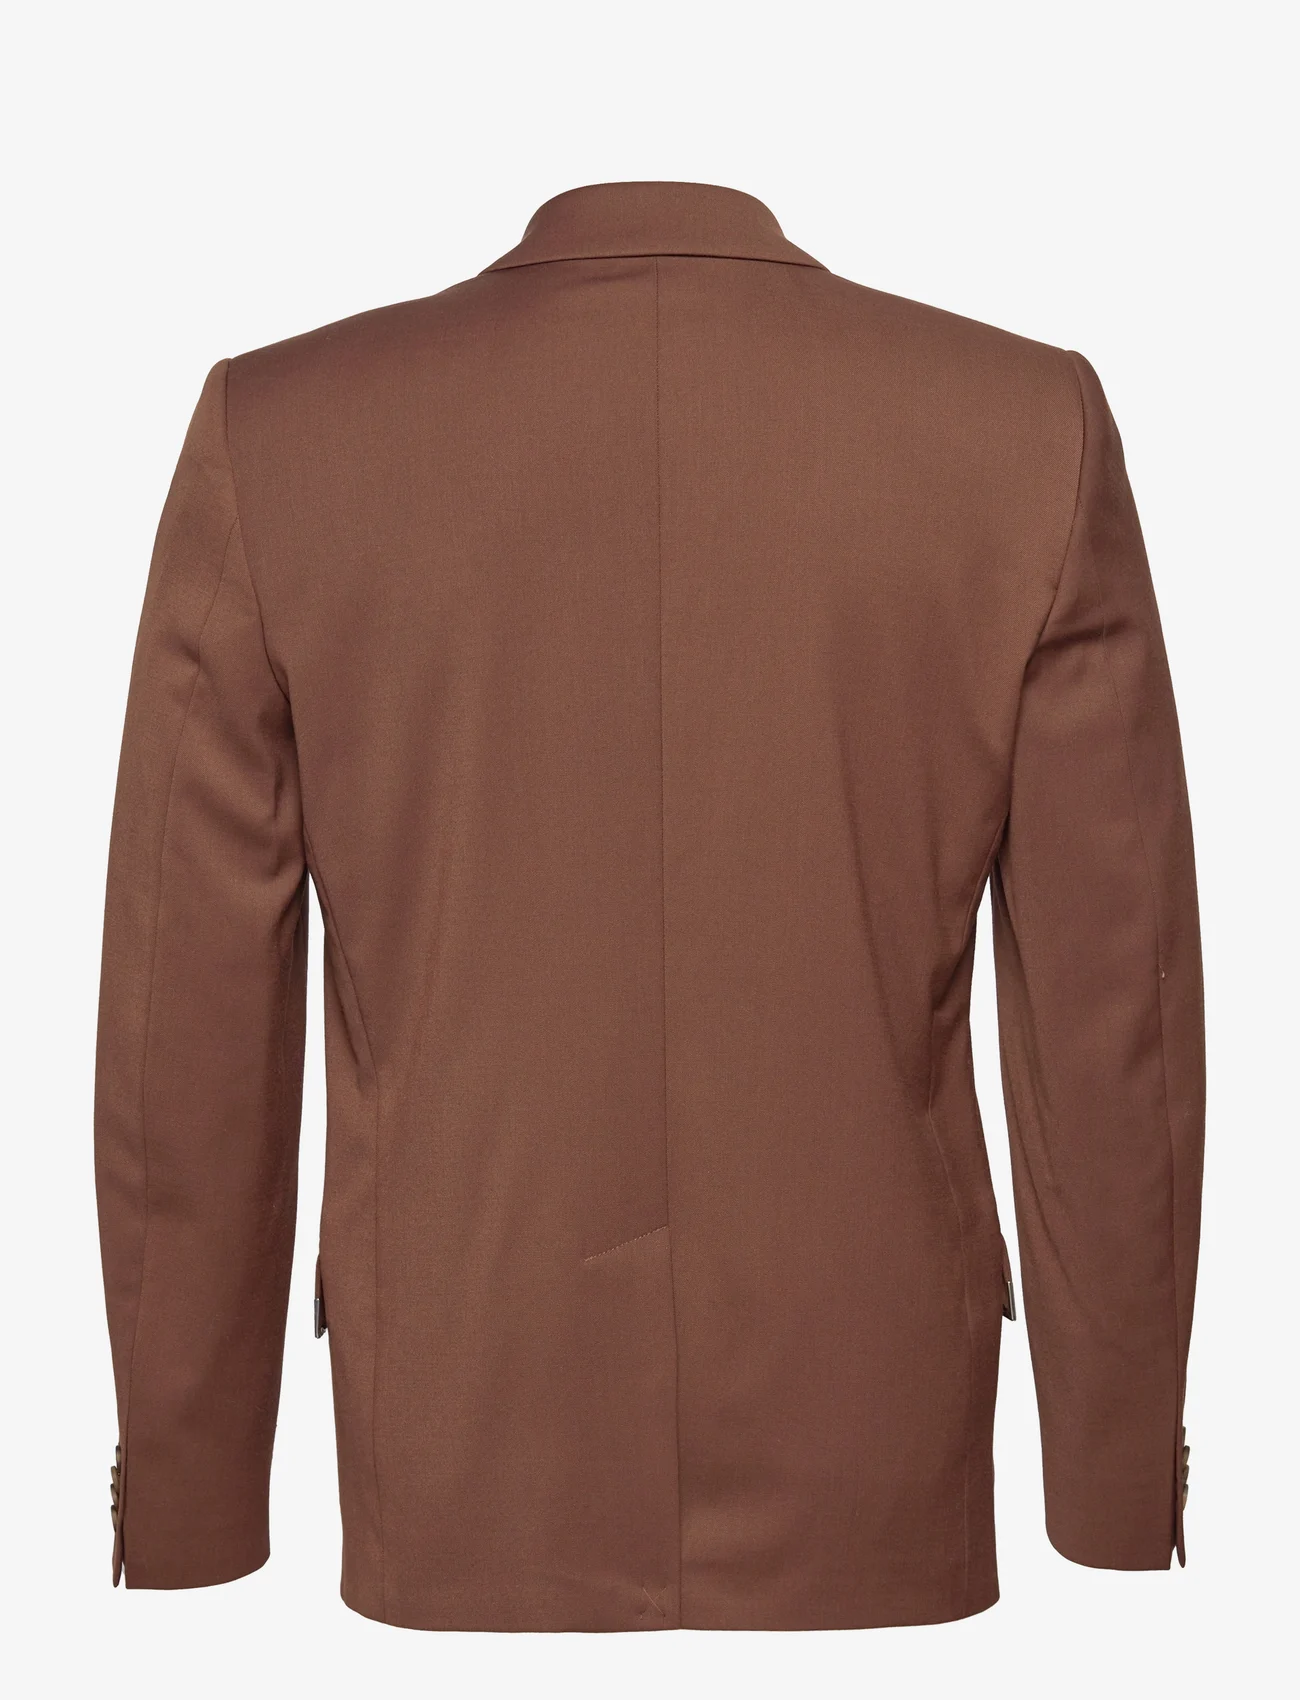 HAN Kjøbenhavn - Single Suit Blazer - zweireiher - brown - 1